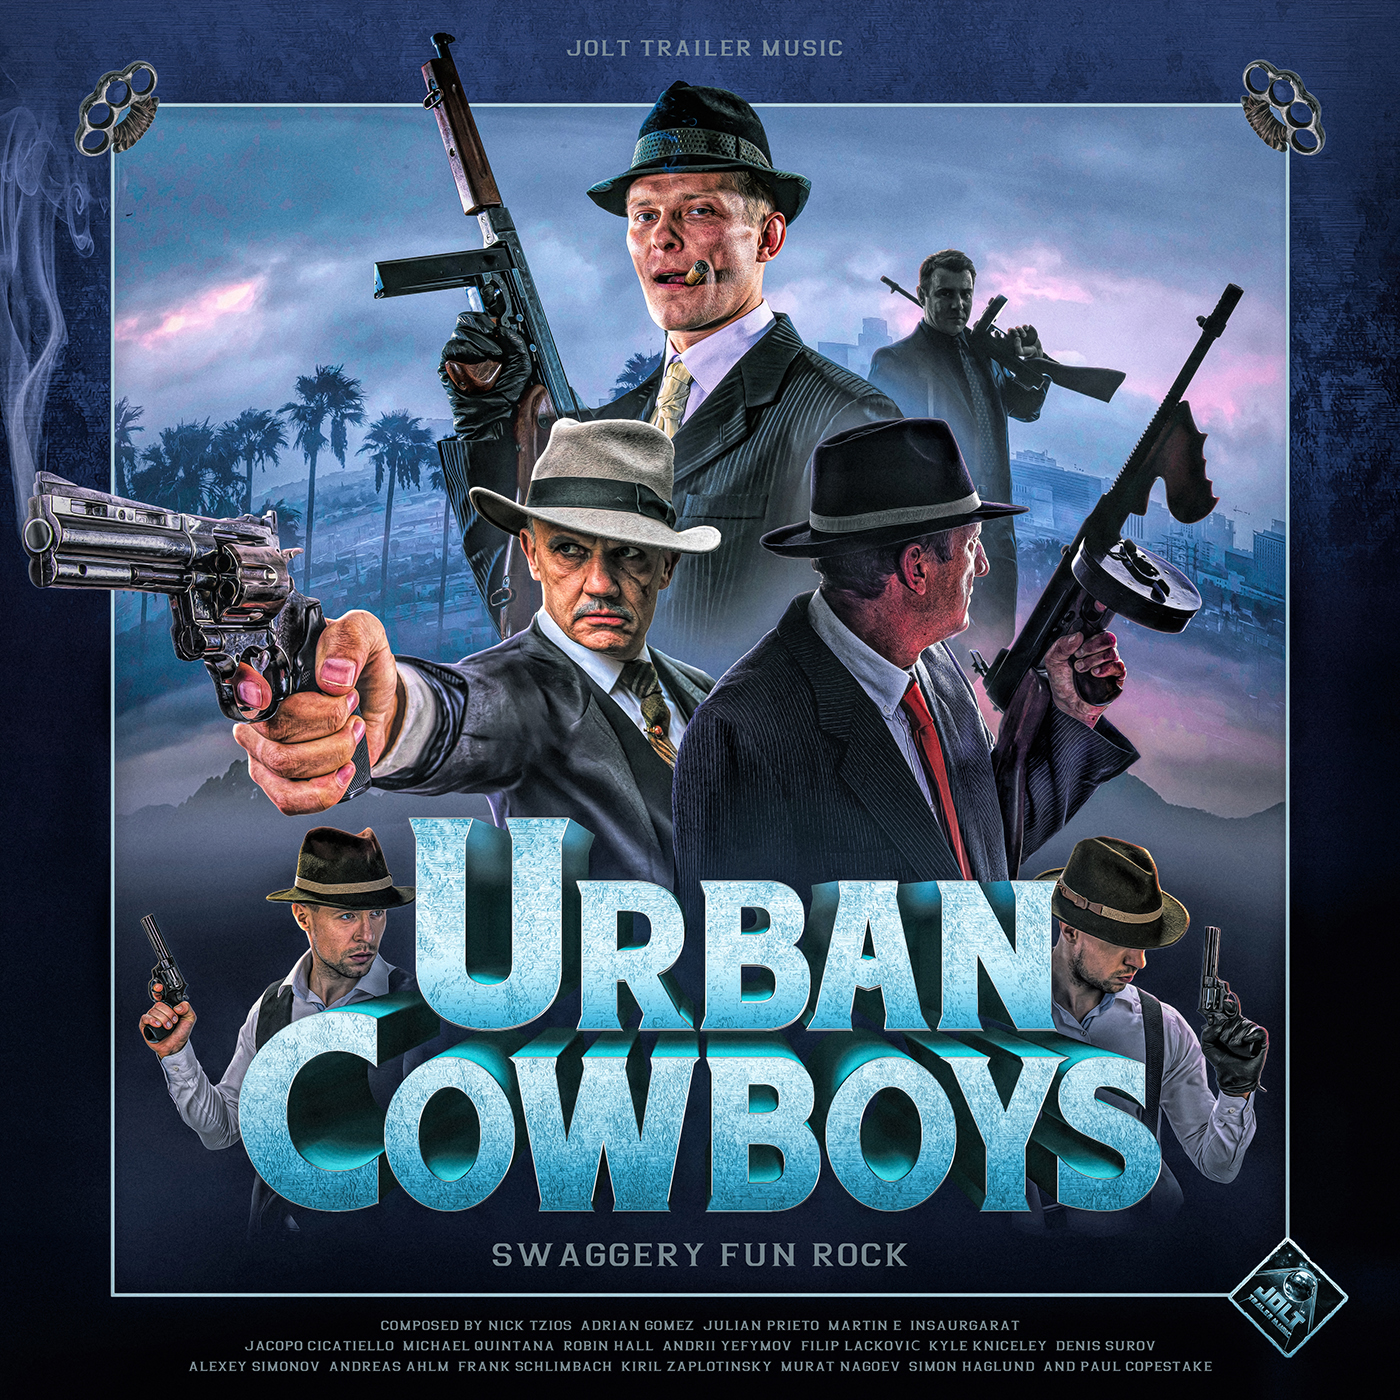 jtm013-urban-cowboys-hd